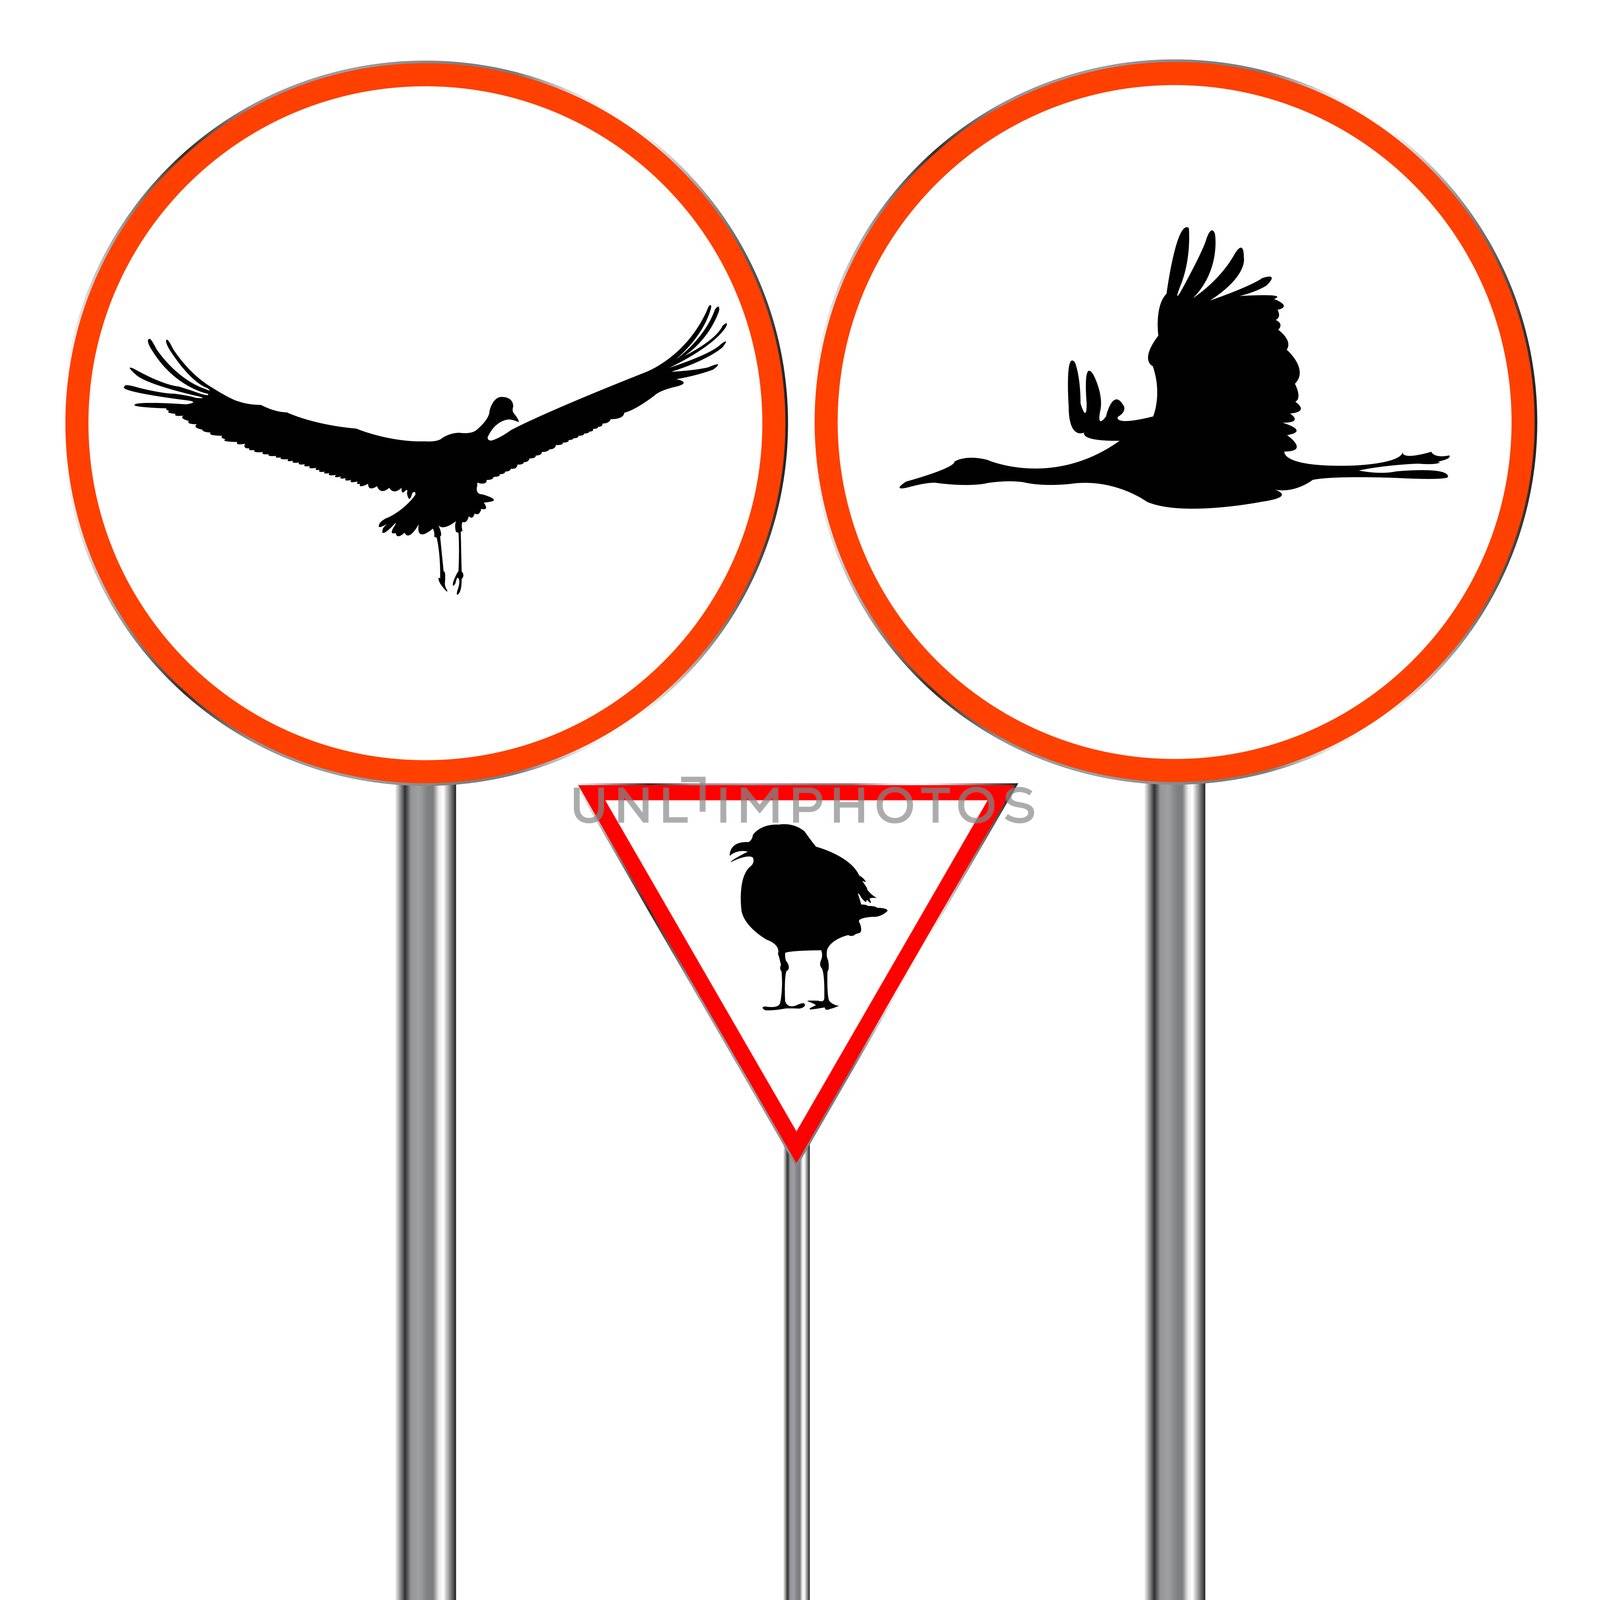 birds traffic sign by robertosch